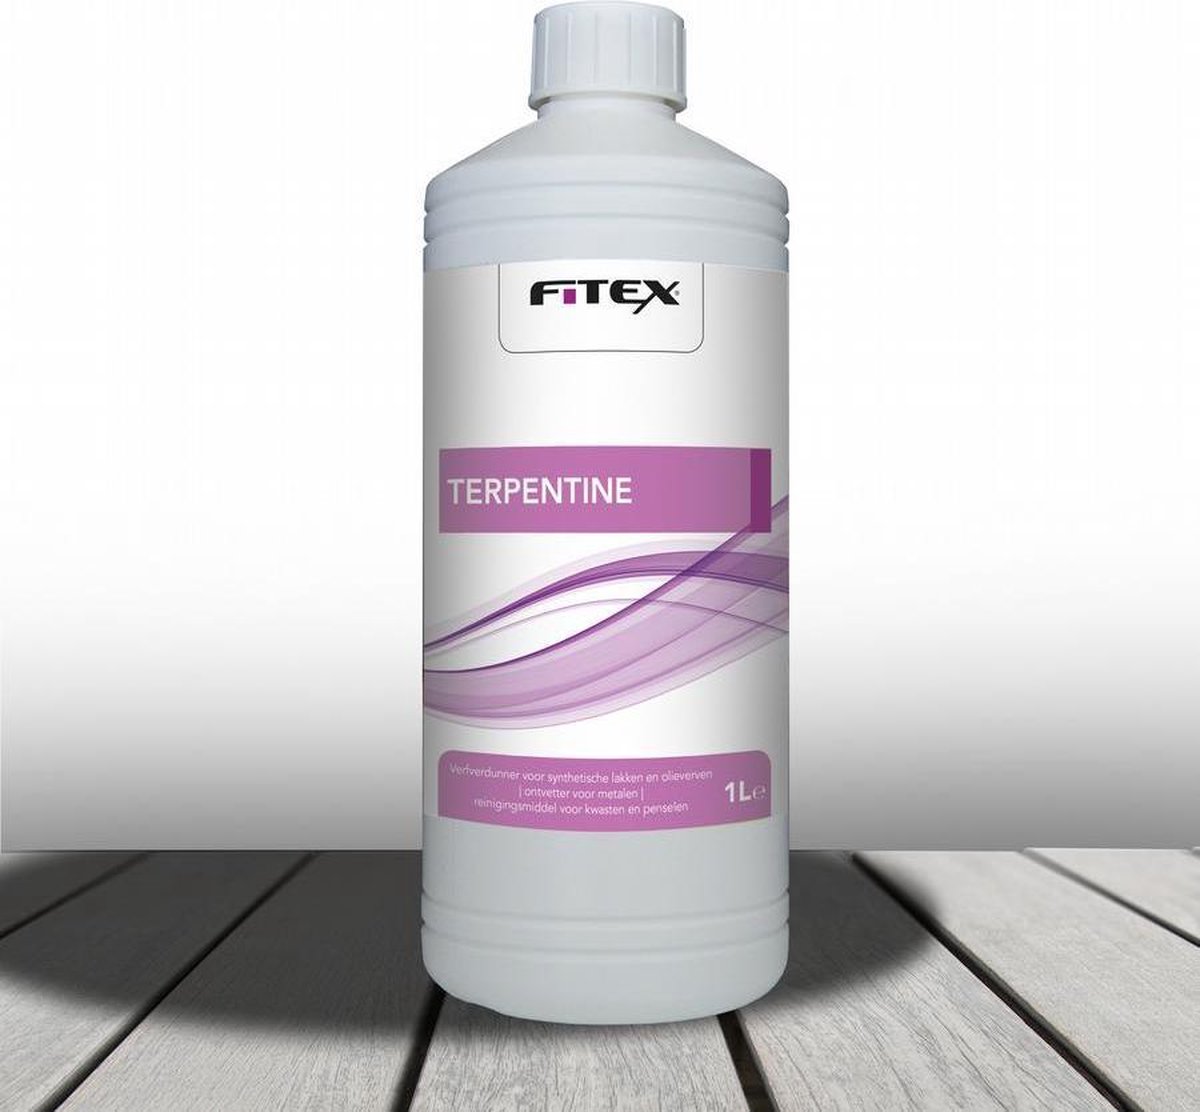 Fitex Terpentine 1 liter - Fitex